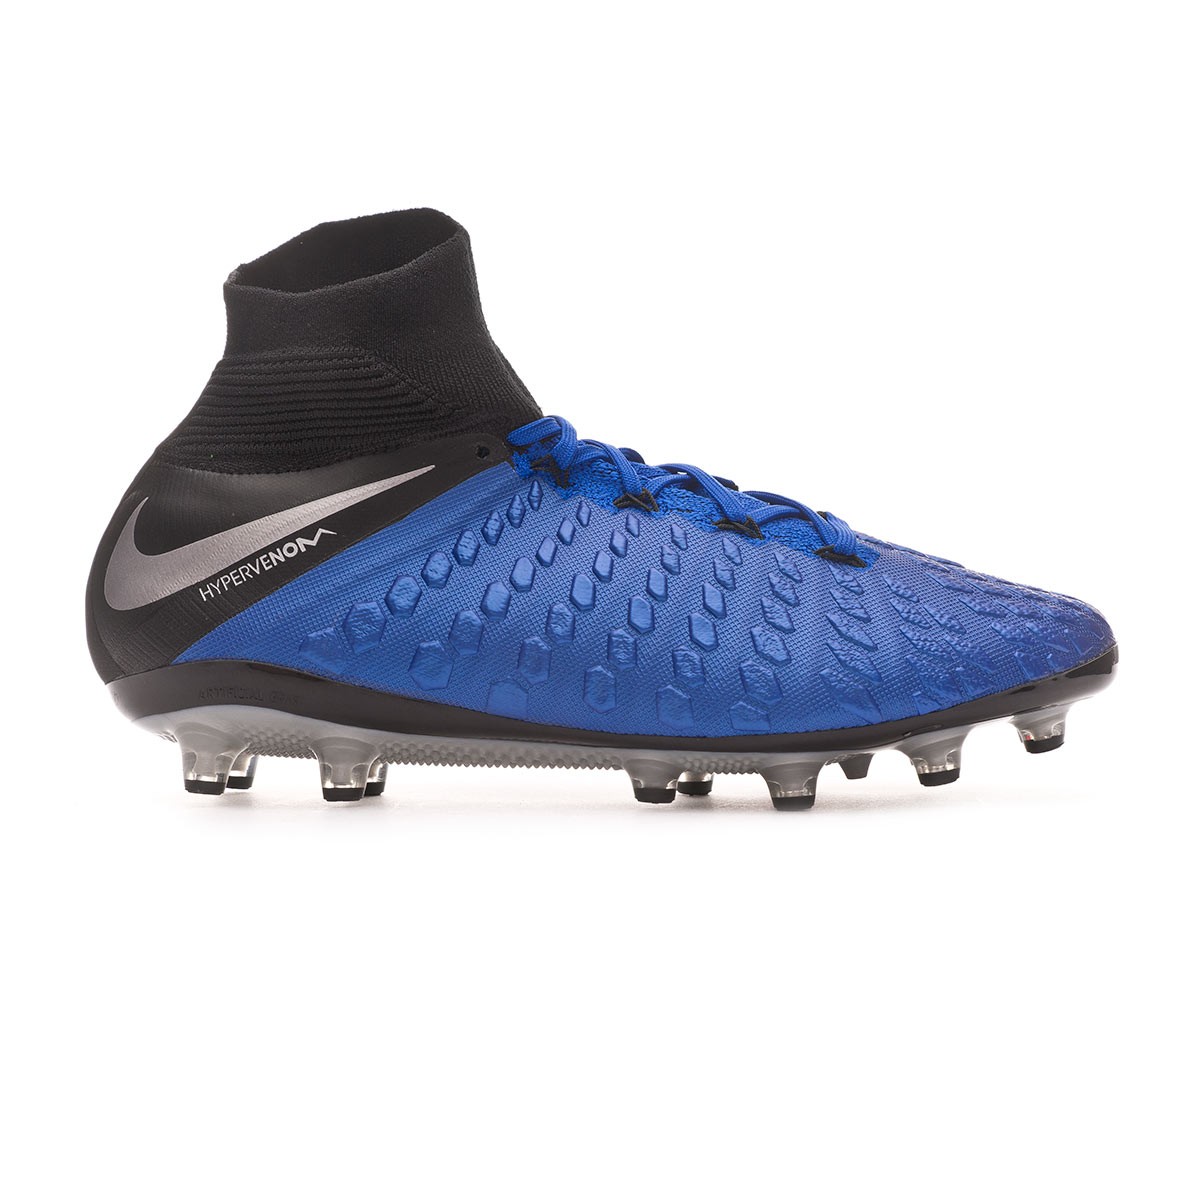 Football Boots Nike Hypervenom Phantom III Elite DF AG-Pro Racer blue-Metallic silver-Black-Volt - Football store Fútbol Emotion